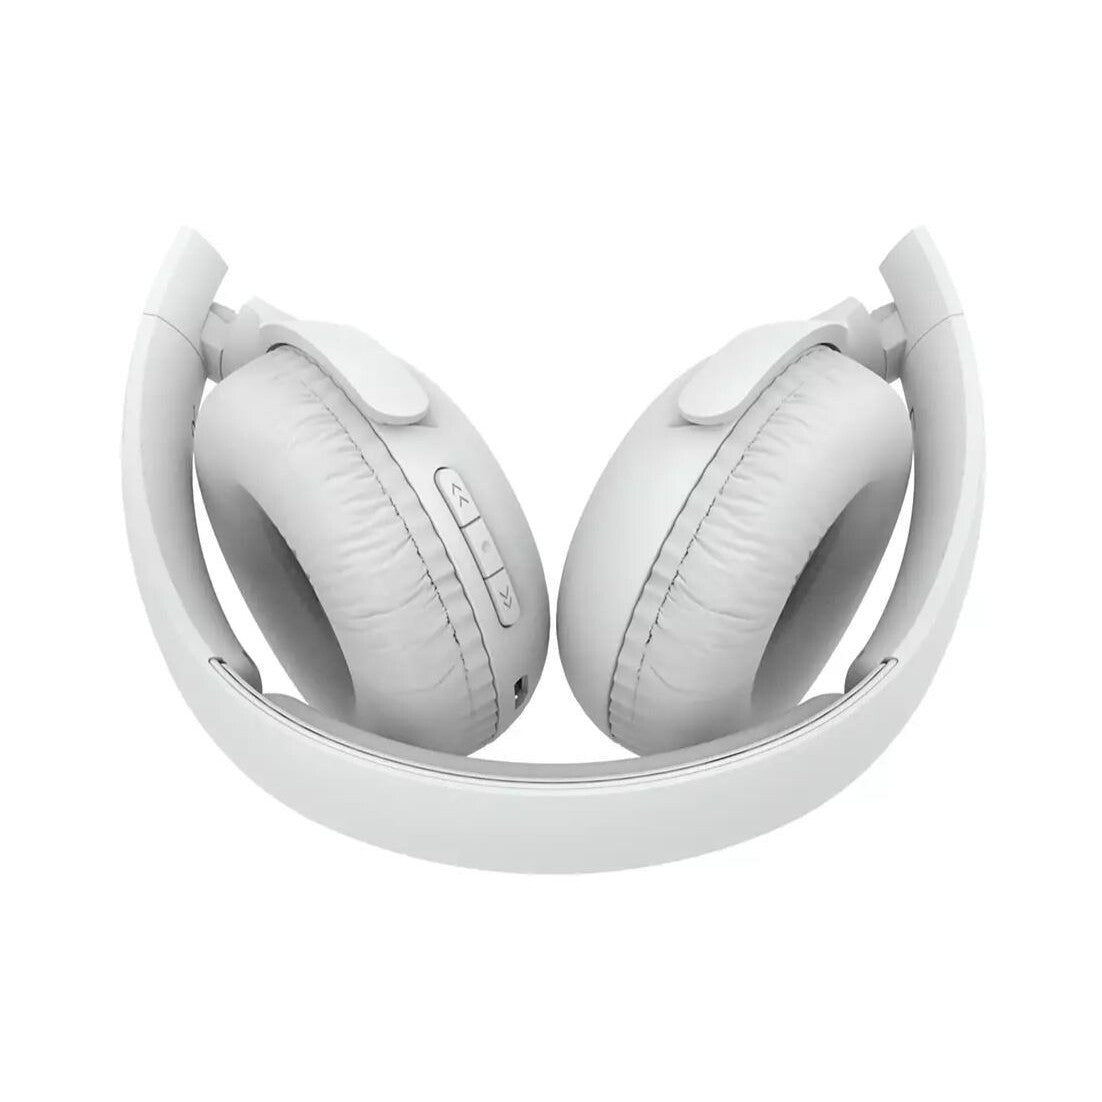 Bezdrátová sluchátka Philips TAUH202WT, bílá